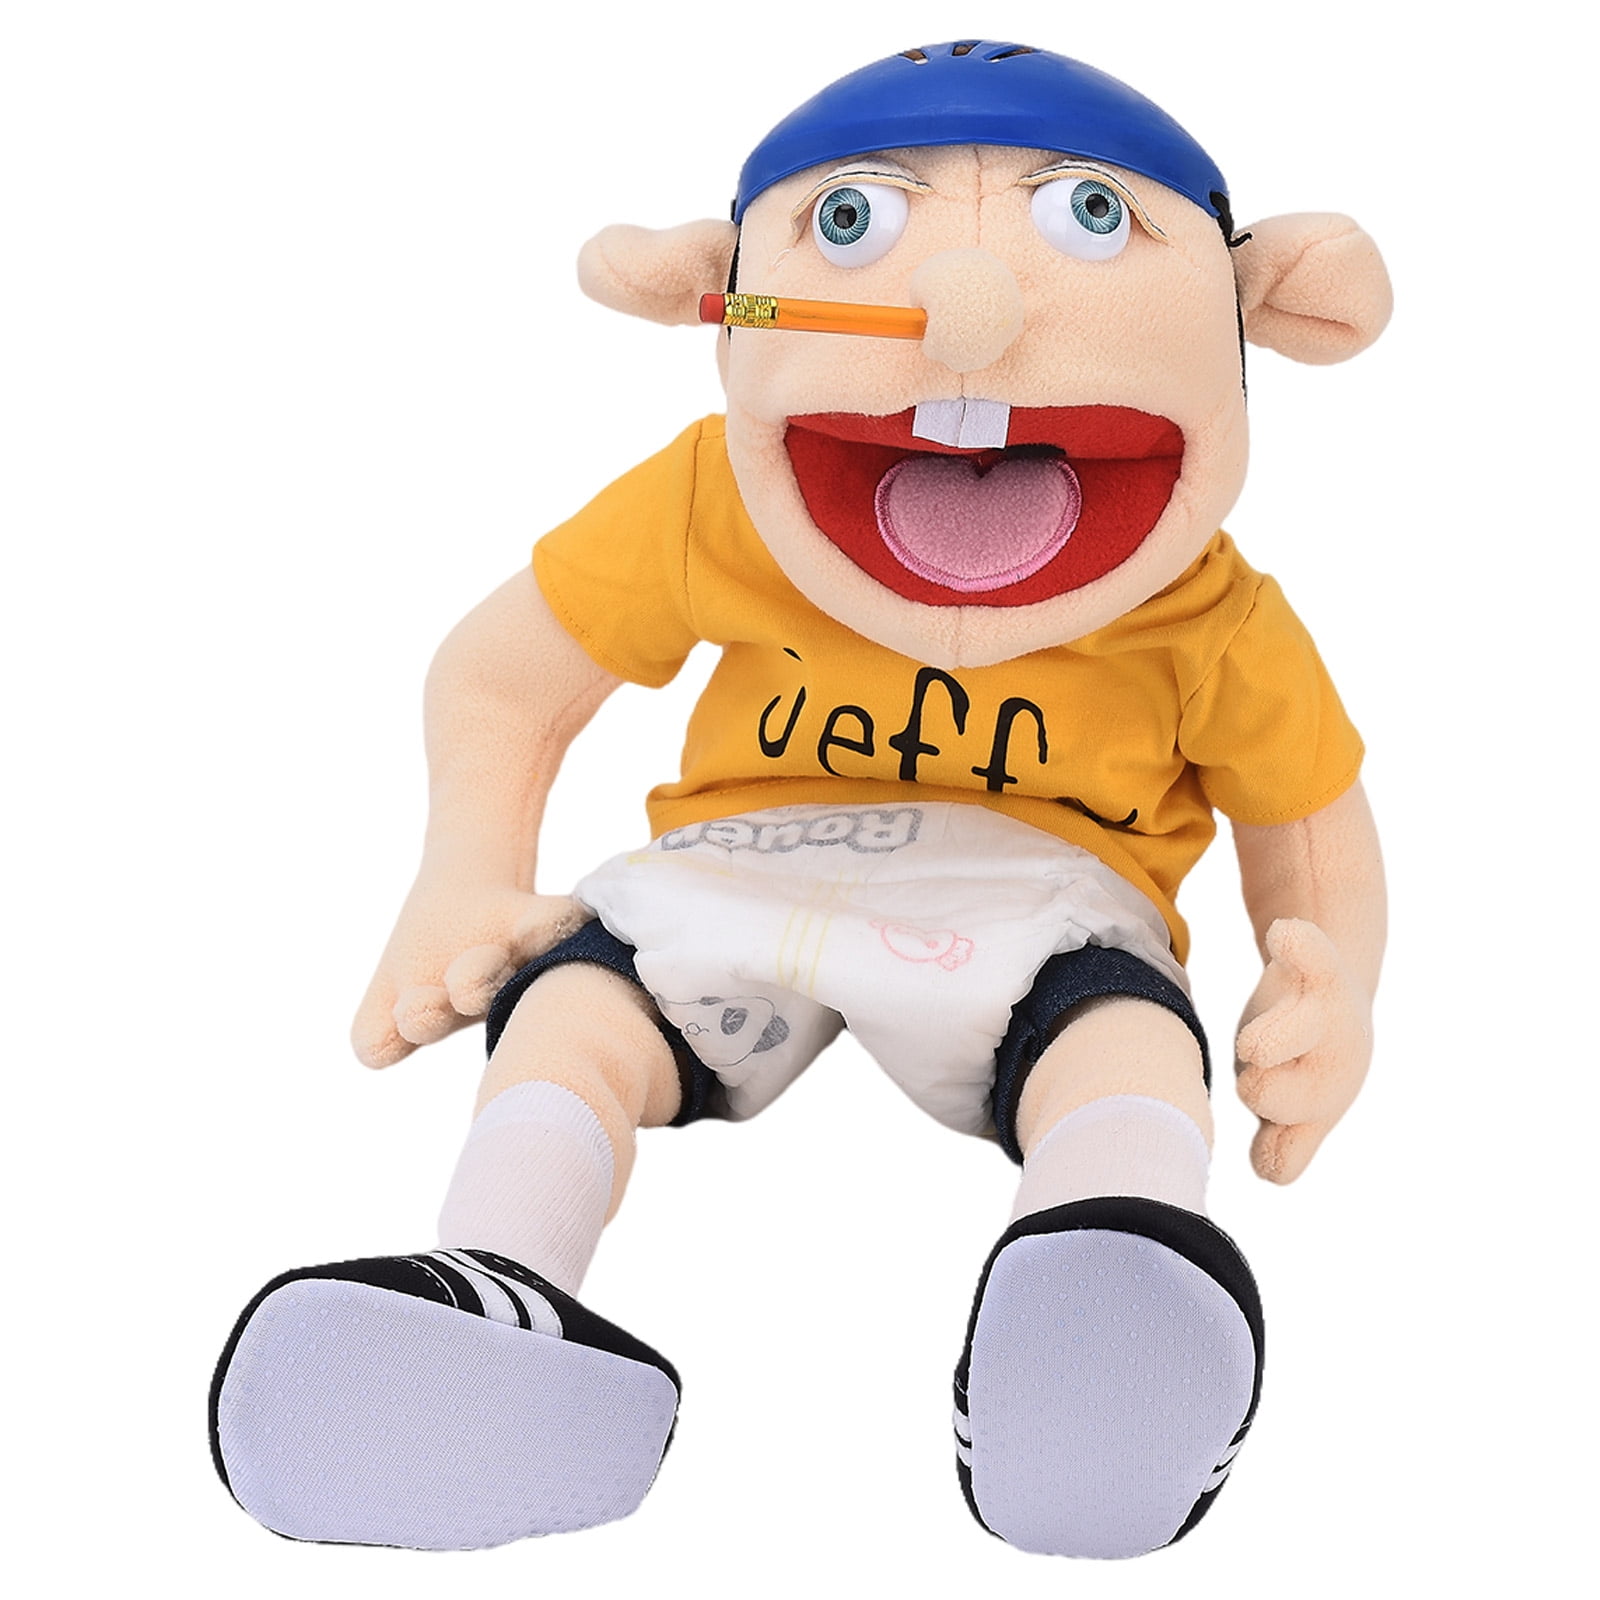 Shop Jeffy Puppet Toy Sml online